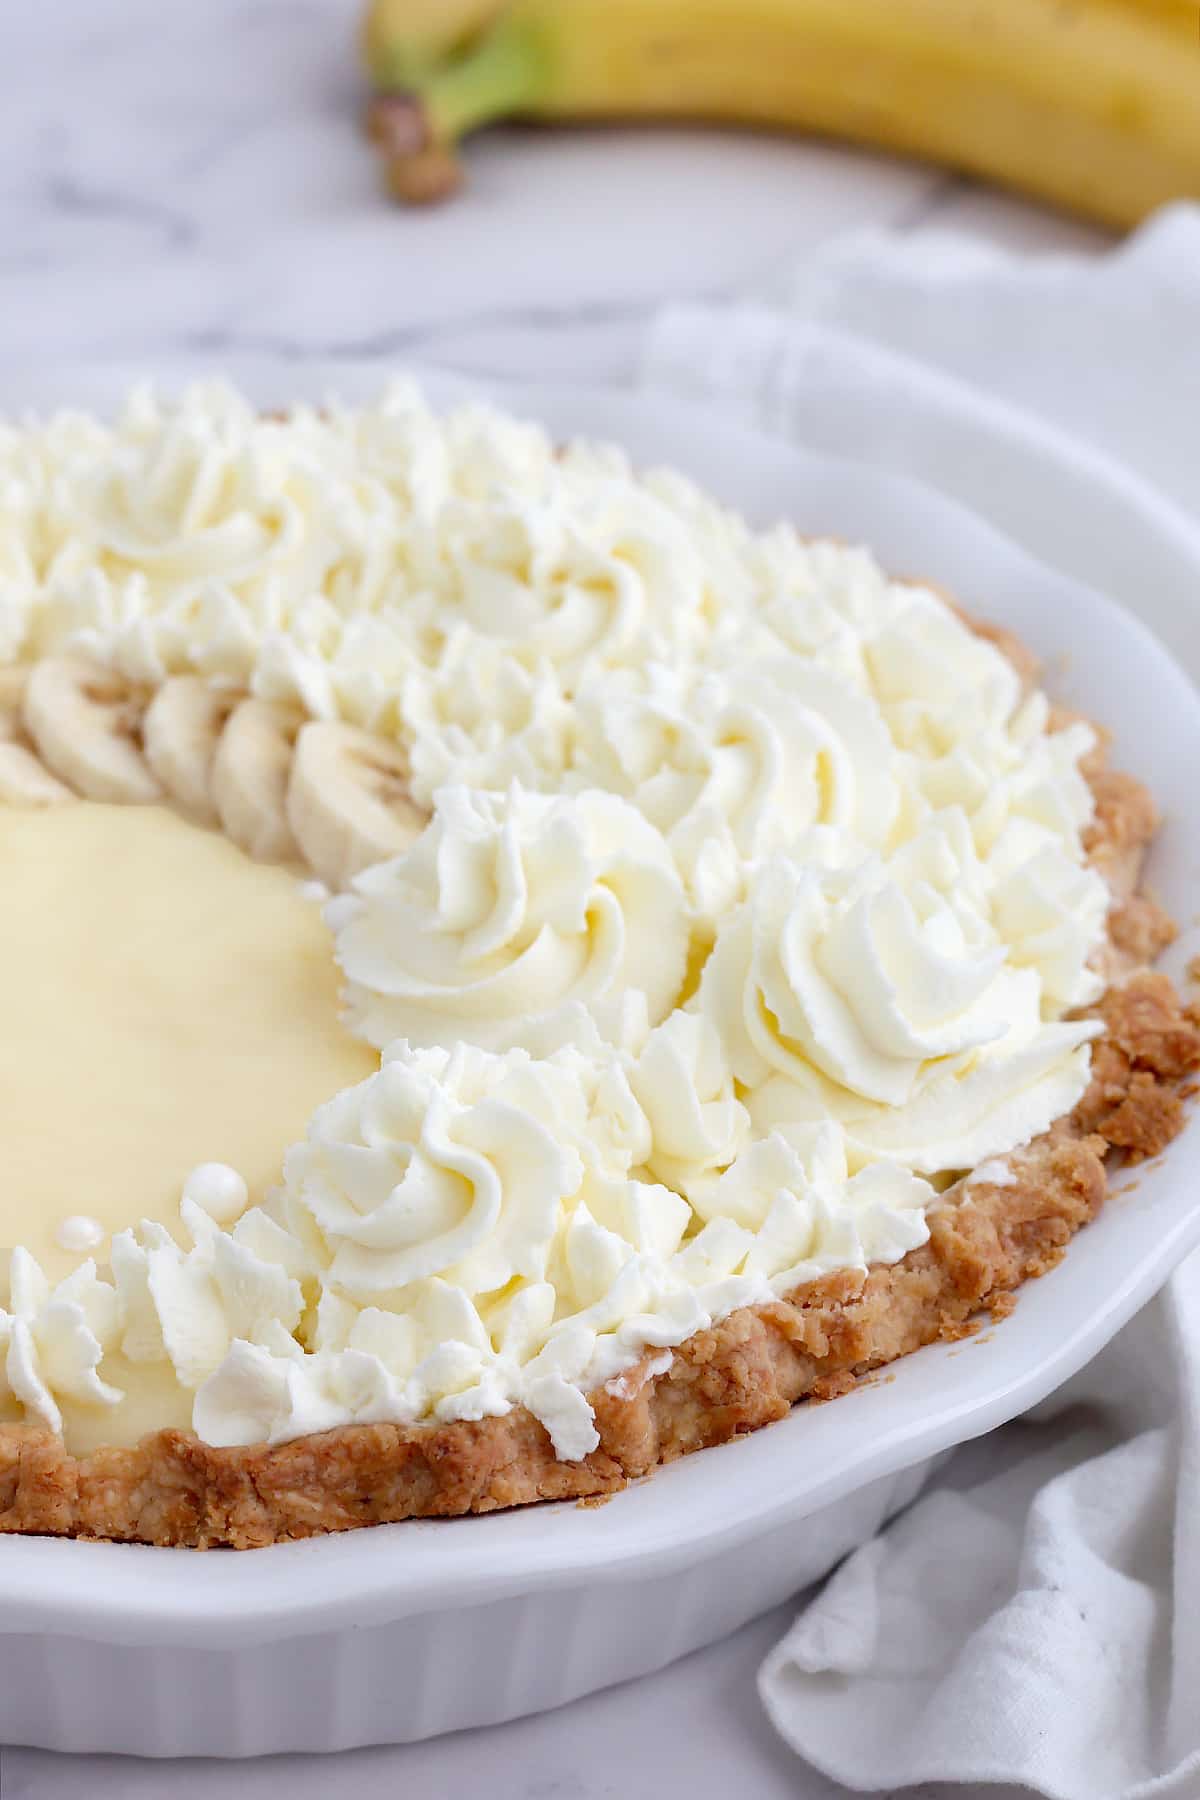 Homemade banana cream pie with whipped cream and banana slices.